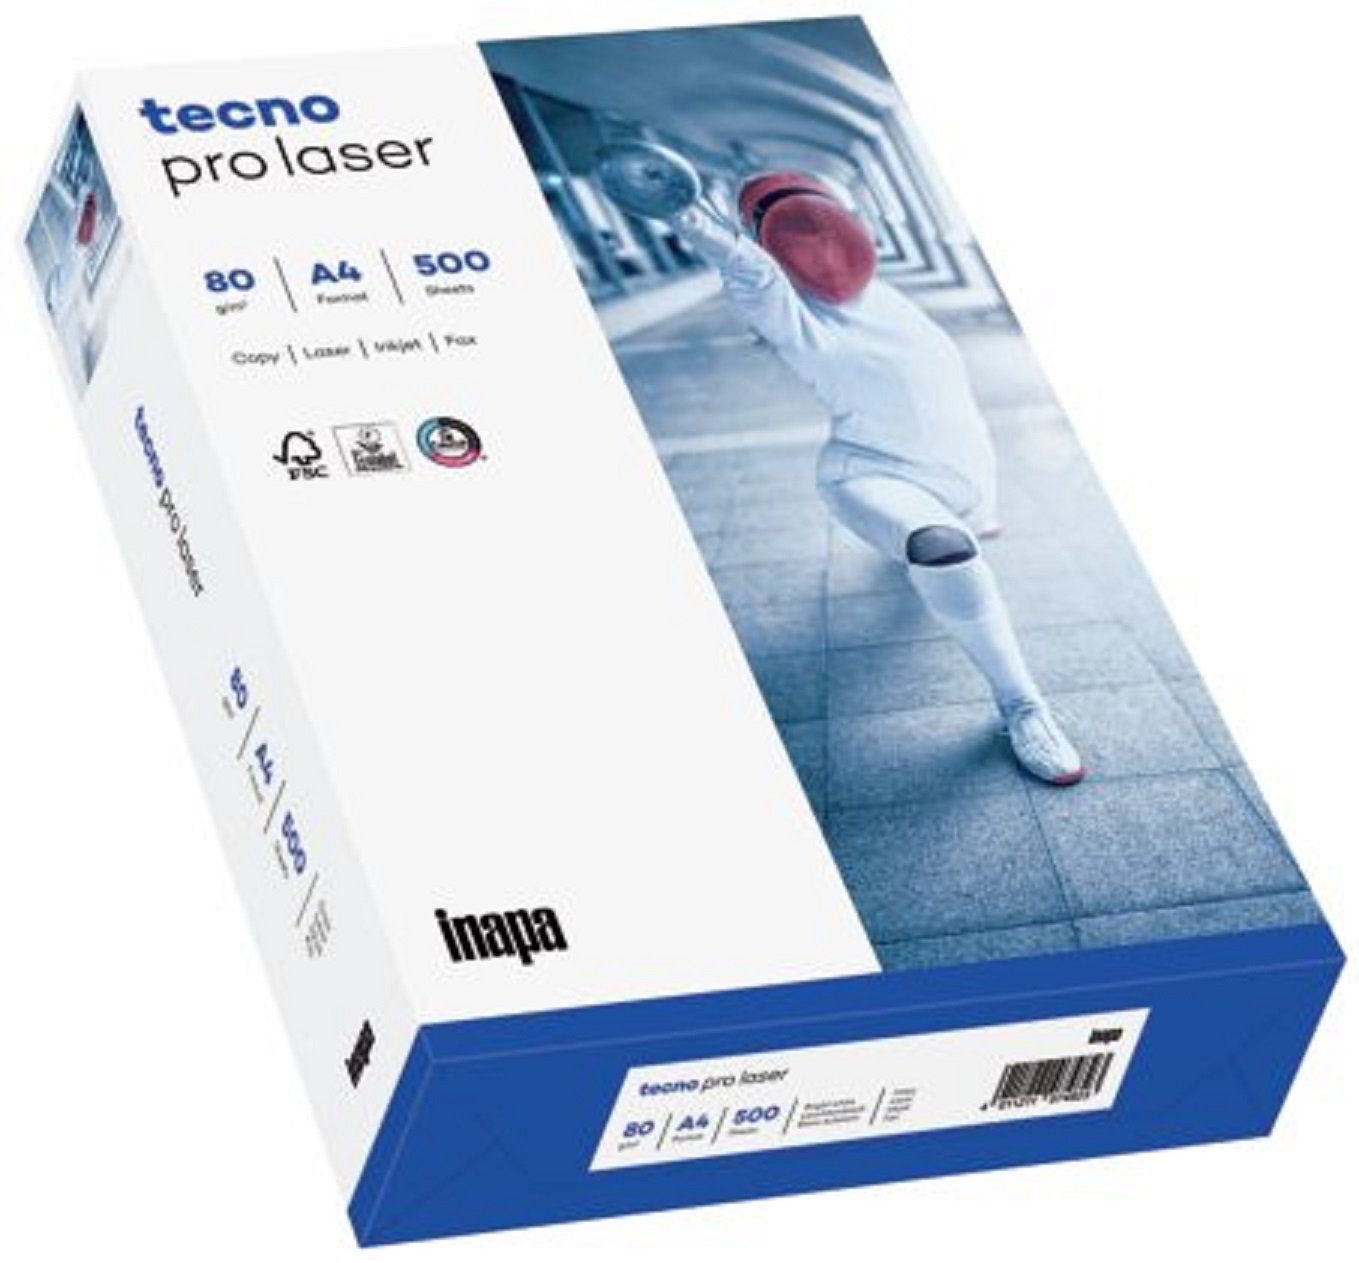 TECNO Formularblock Kopierpapier tecno® pro laser - A4, 80 g/qm, weiß, 500 Blatt